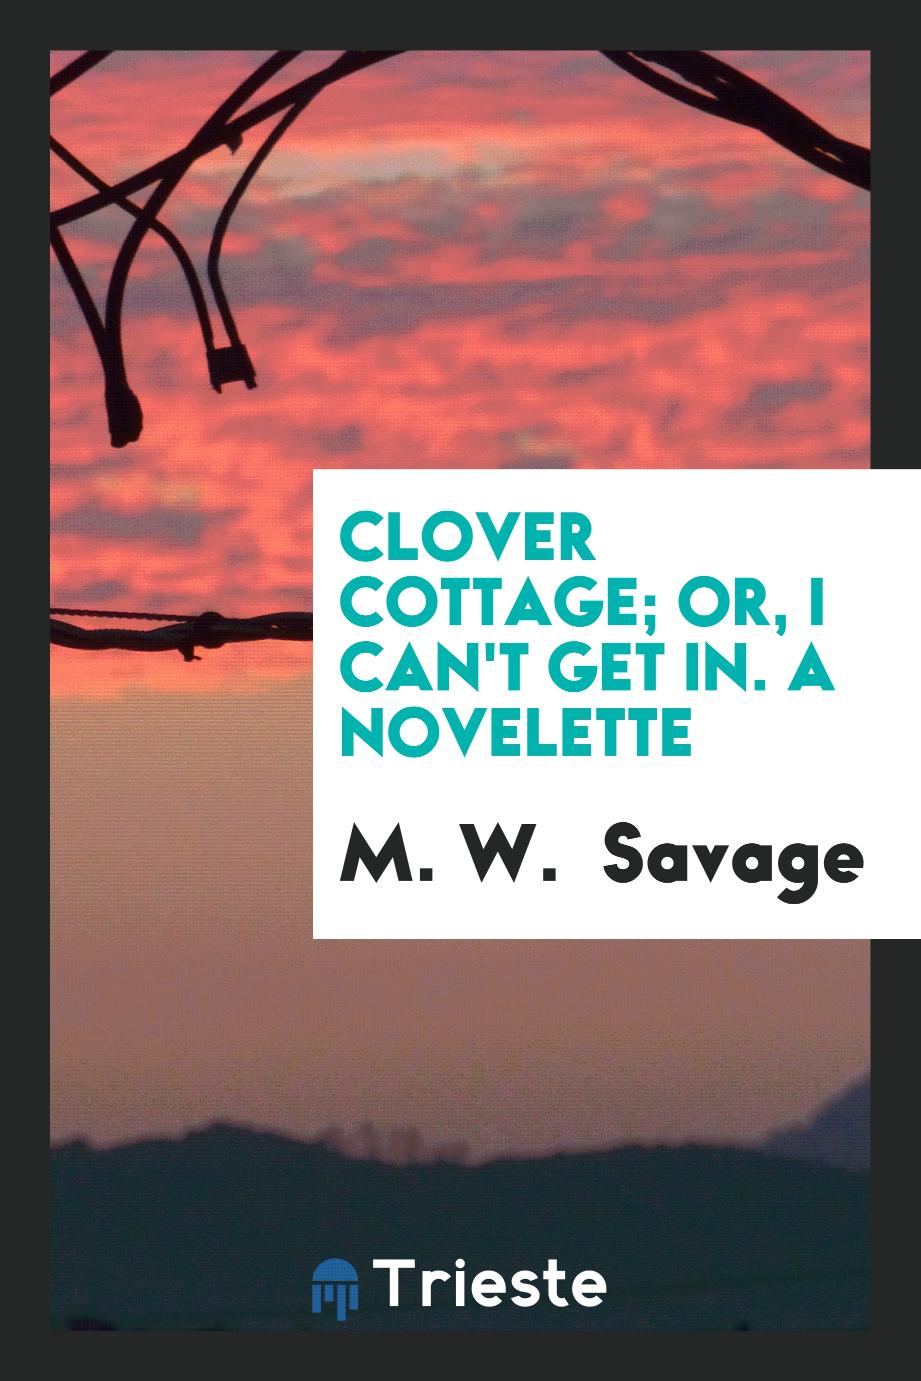 Clover cottage; Or, I can't get in. A novelette